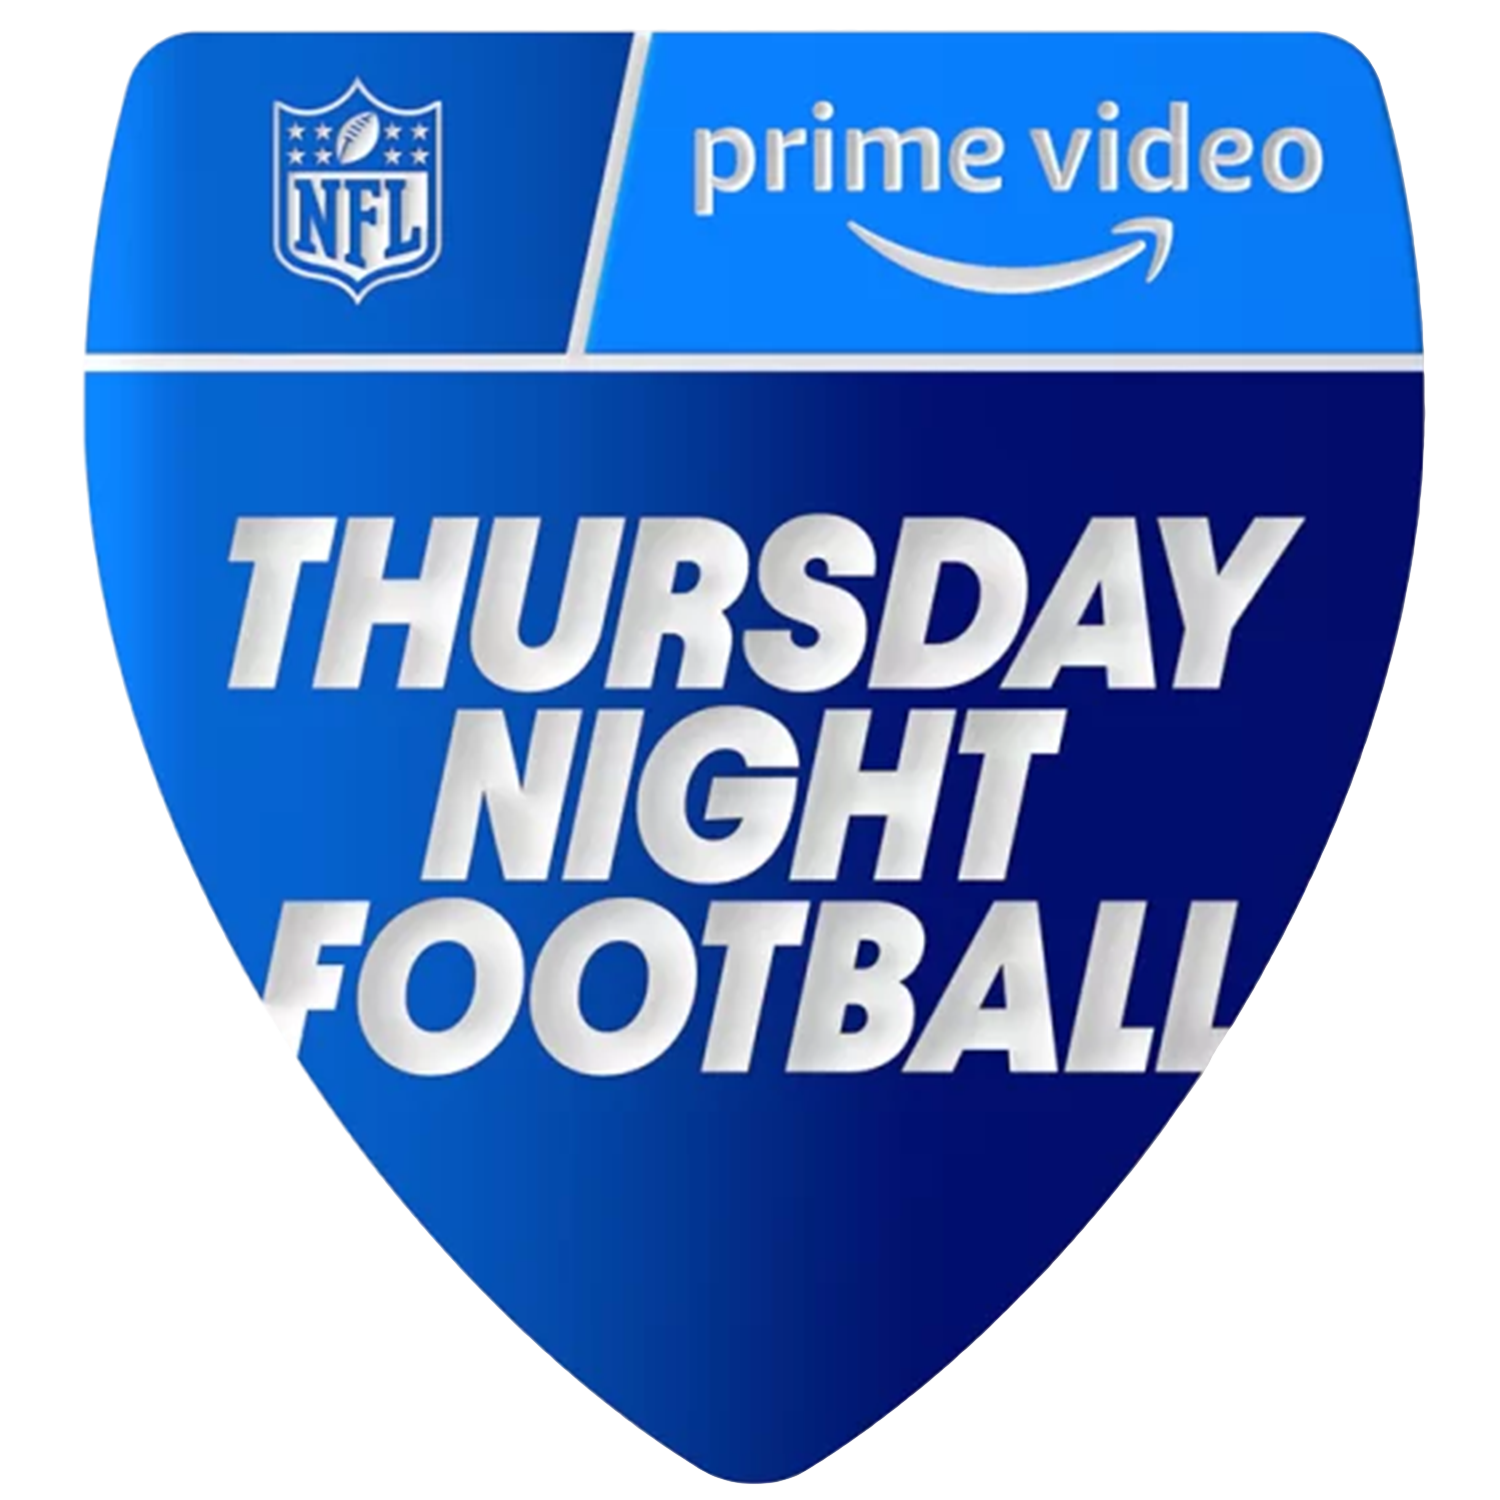 Compadre - NBC – Sunday Night Football Logo Refresh